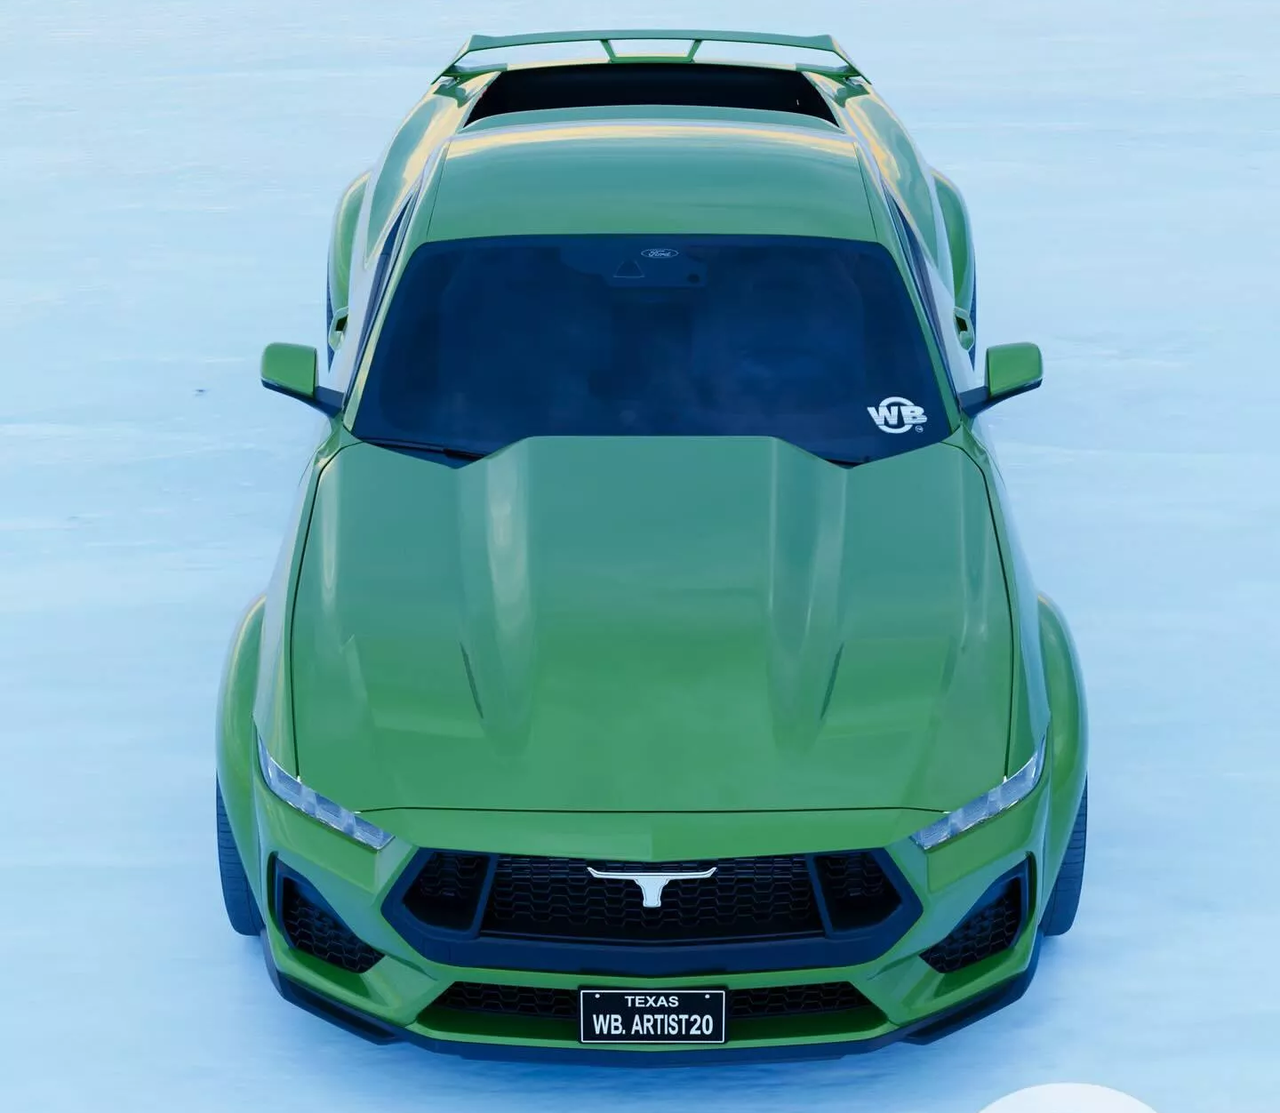 ▲ Picape Mustang (imagem = Instagram 'wb.artist20')